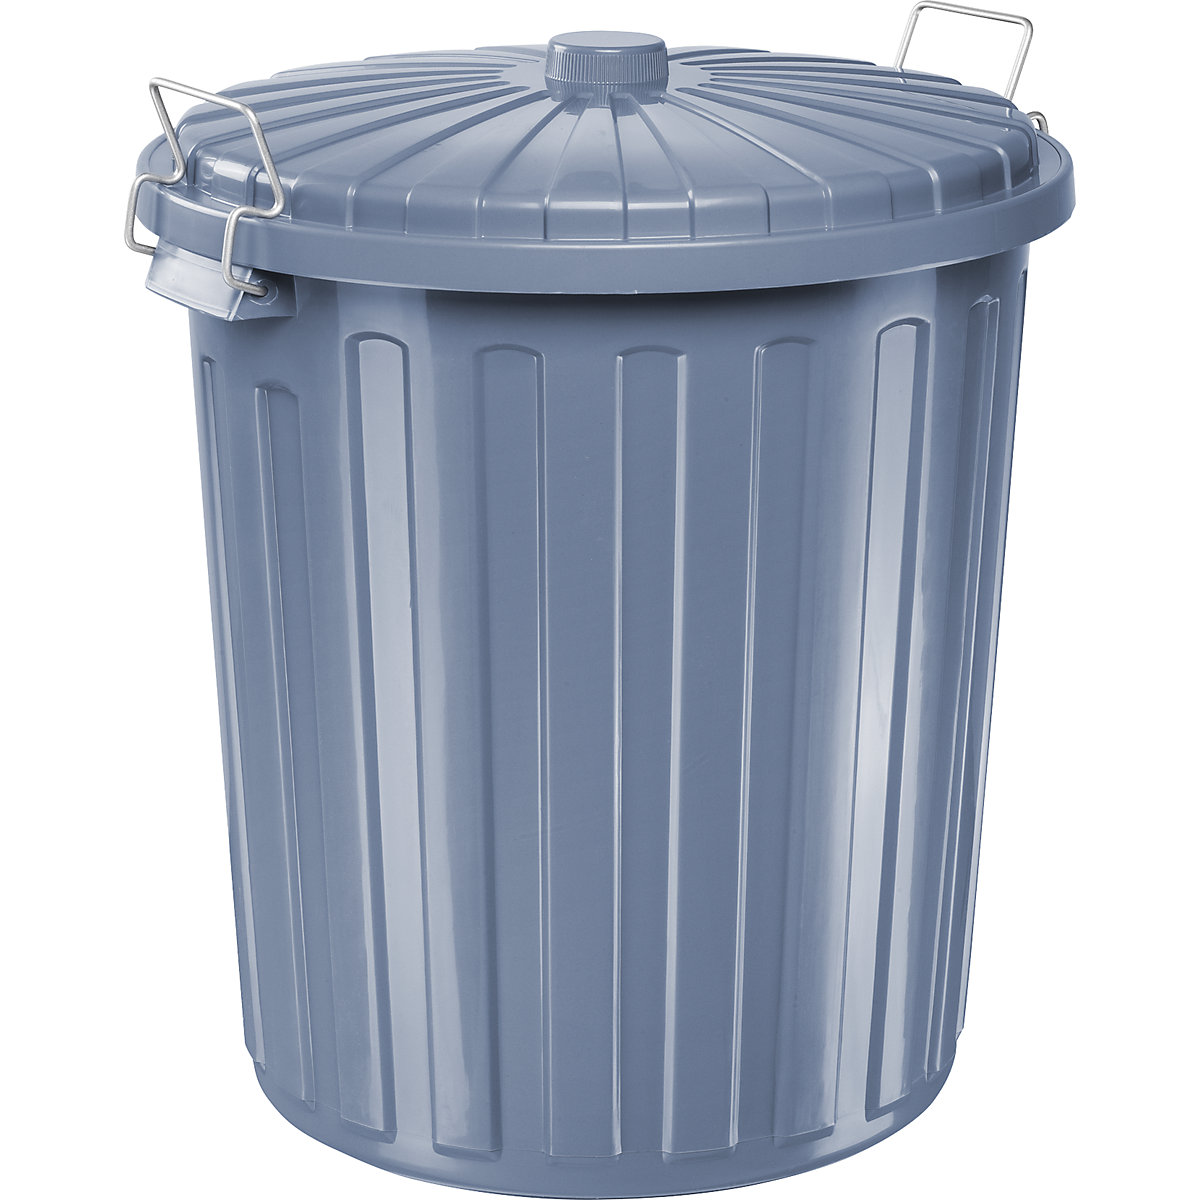 Waste bin with lid, polypropylene, grey, capacity 55 l-1